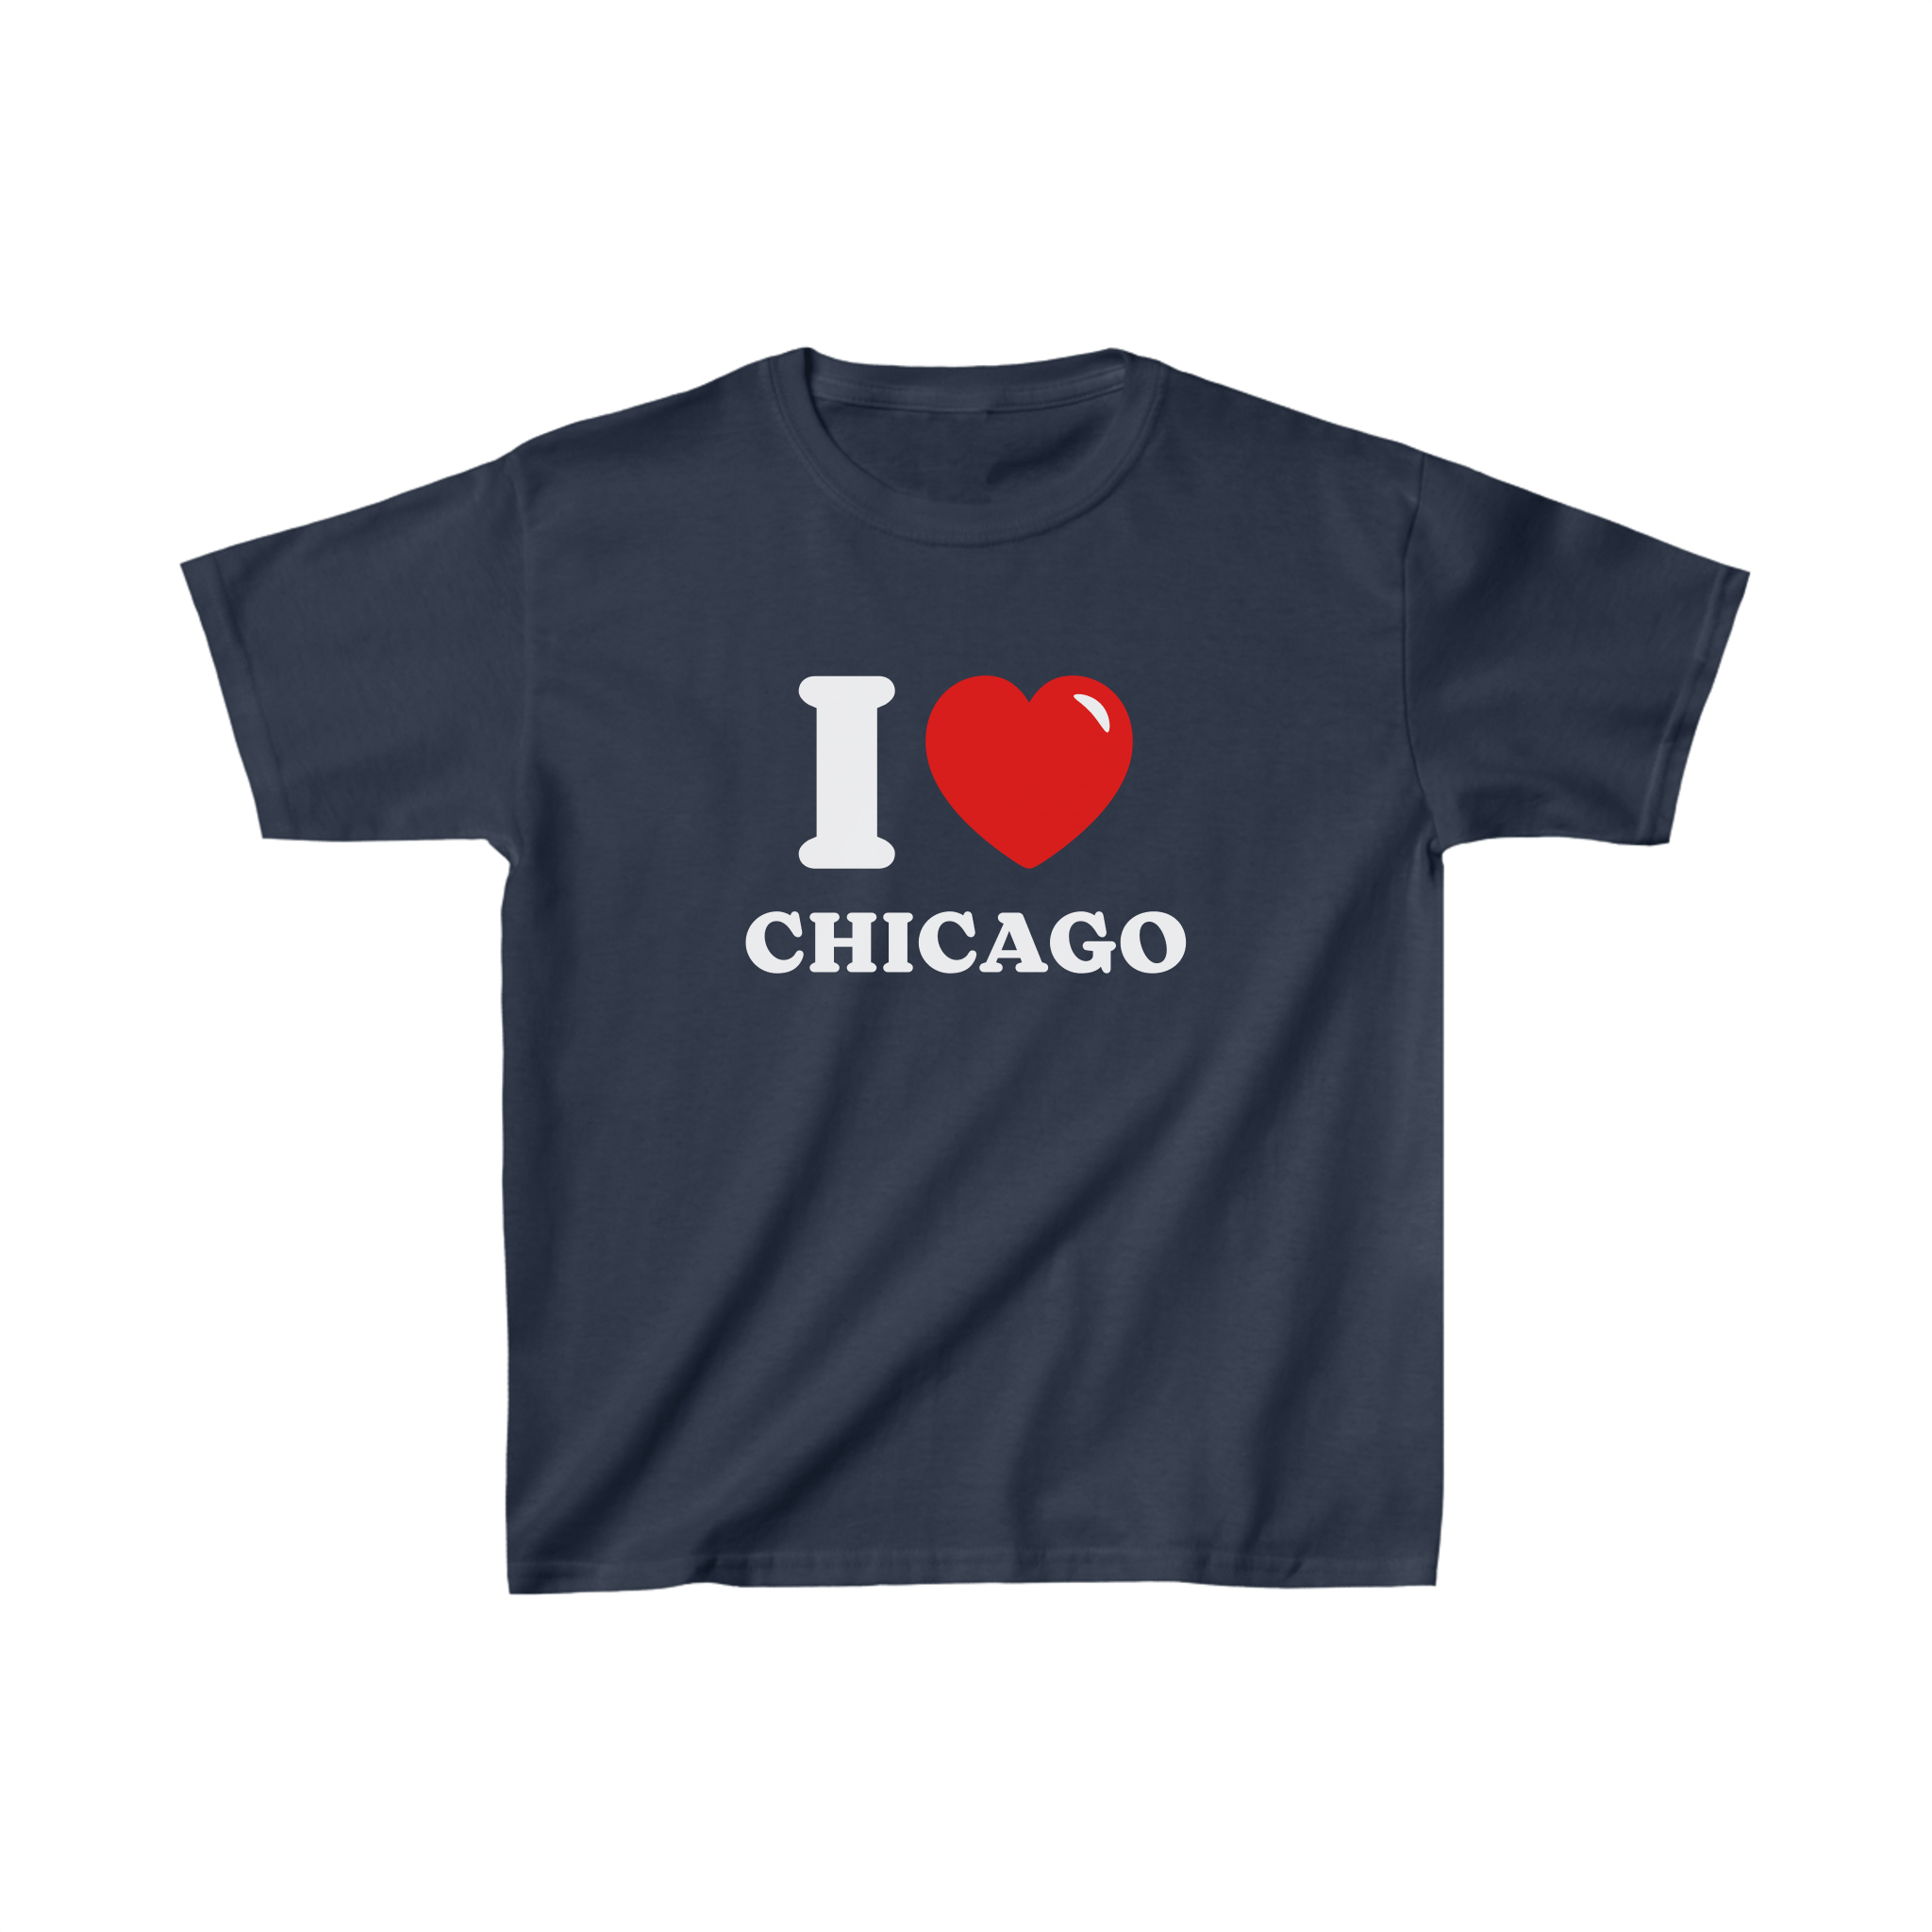 'I love Chicago' baby tee - In Print We Trust